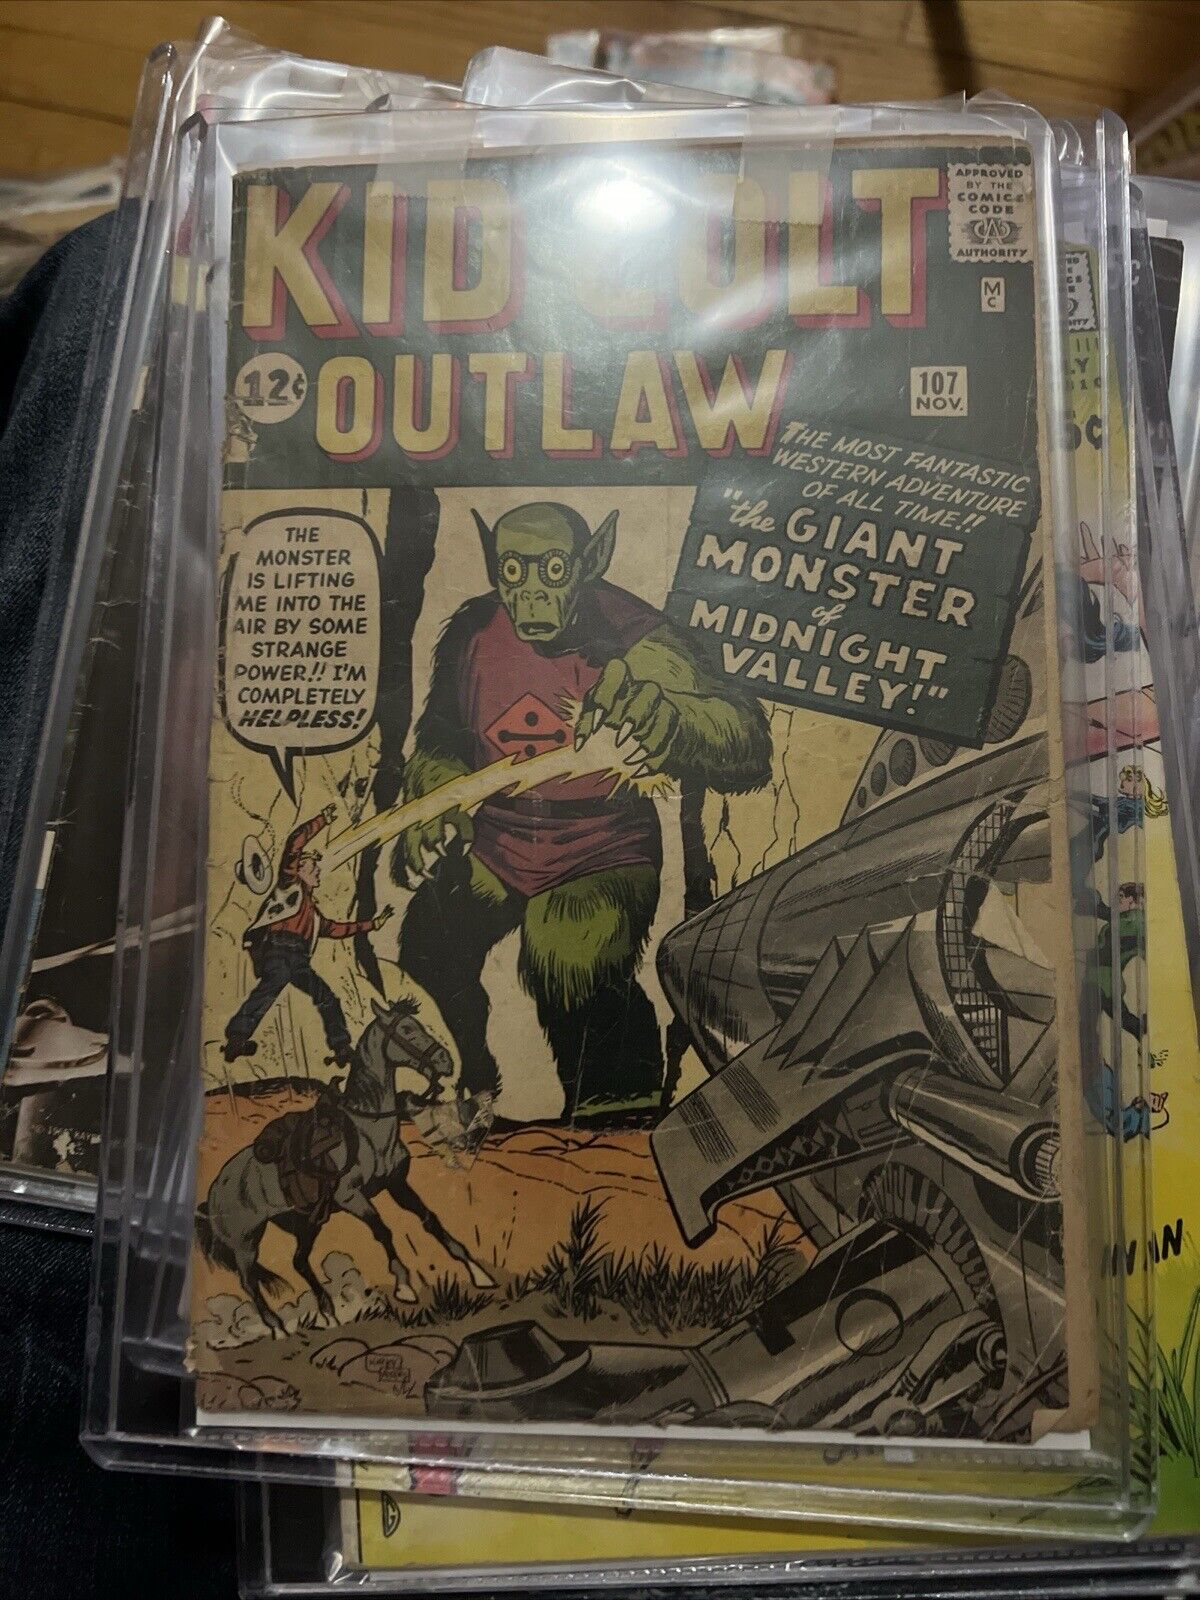 1962 Kid Colt Outlaw # 107 